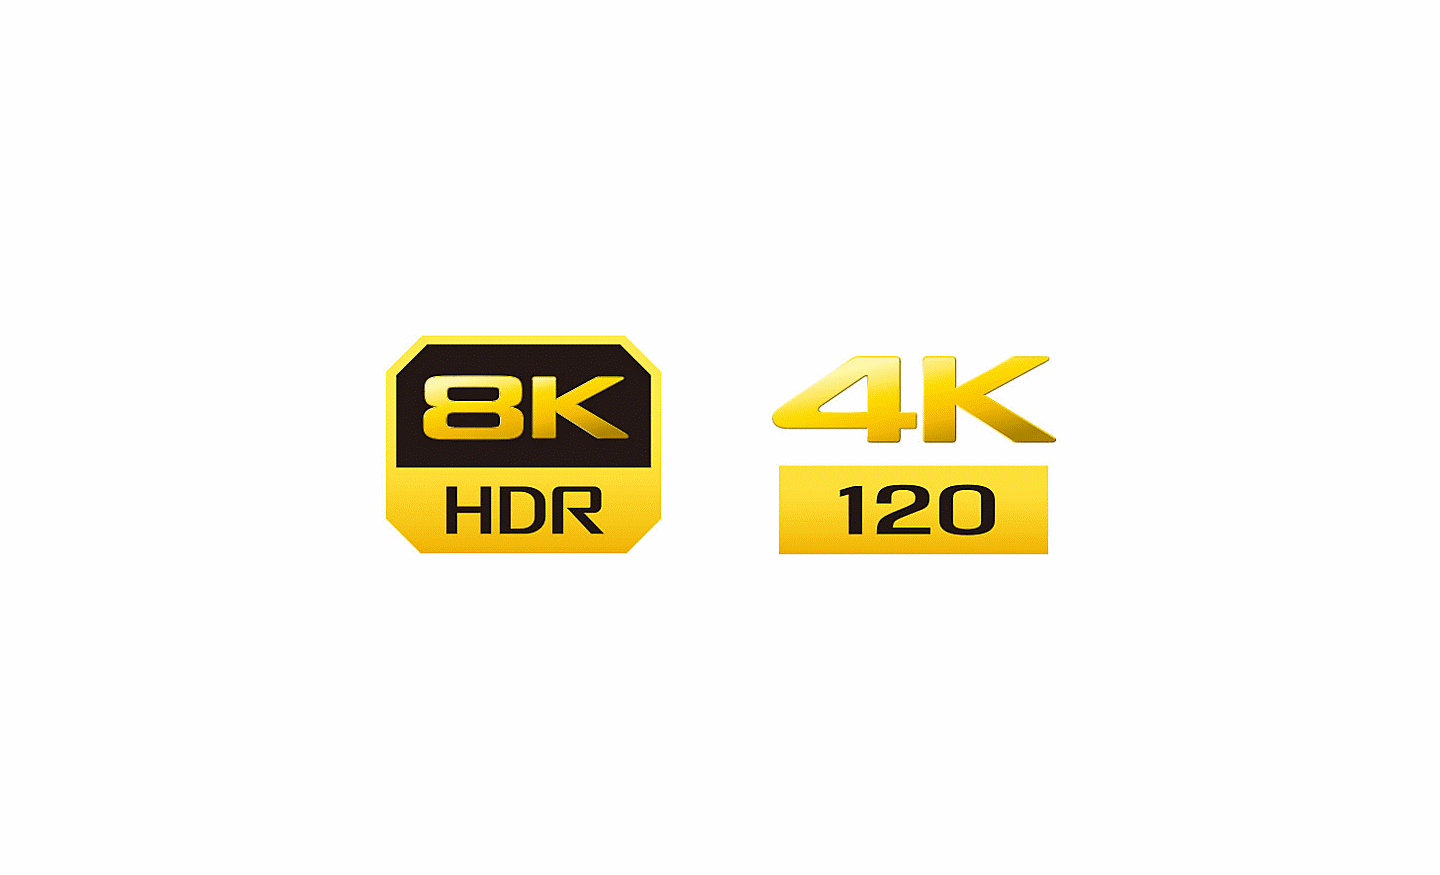 Logos 8K HDR et 4K 120